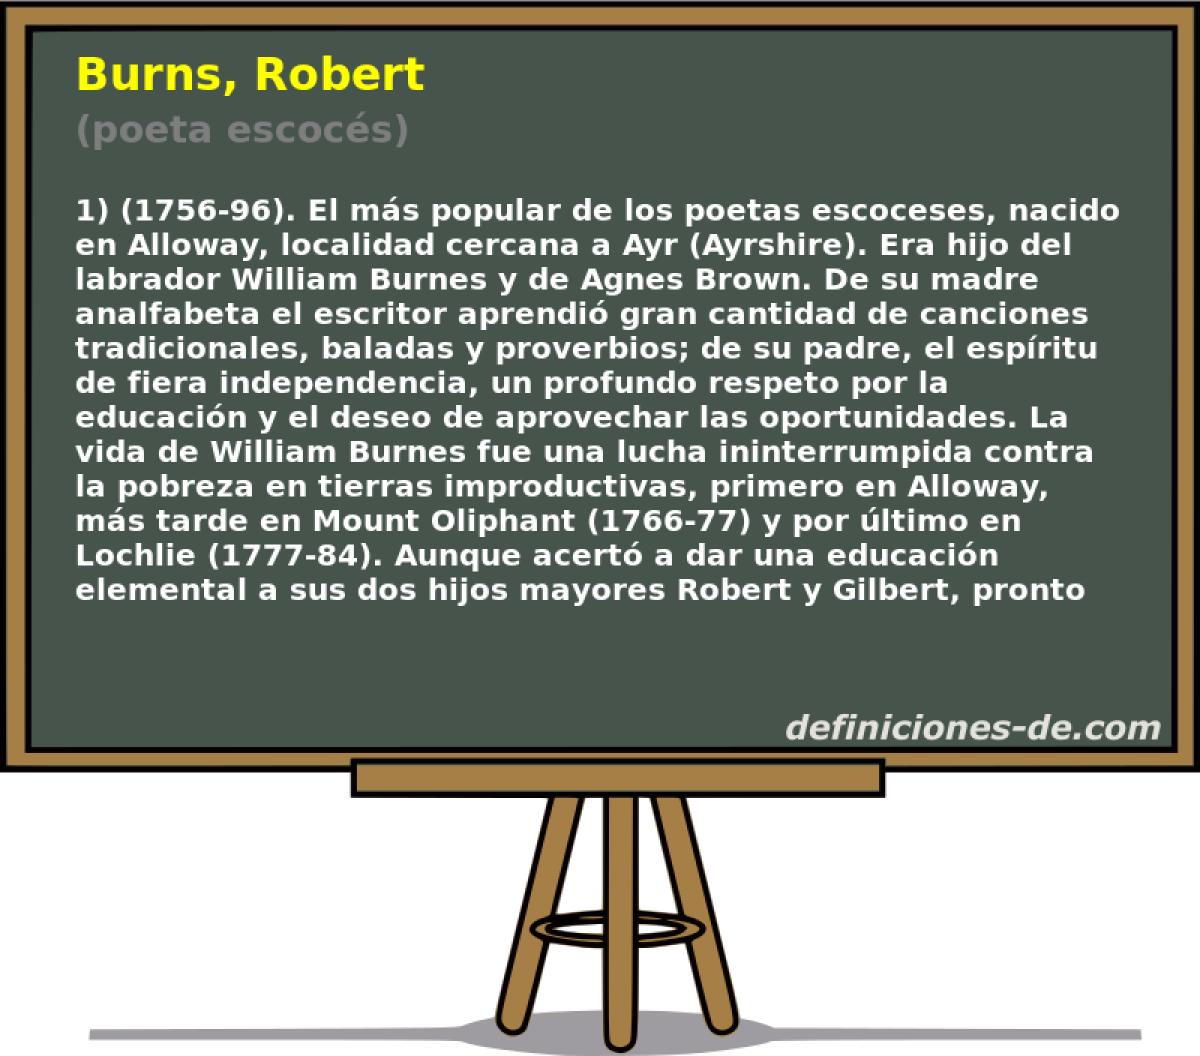 Burns, Robert (poeta escocs)